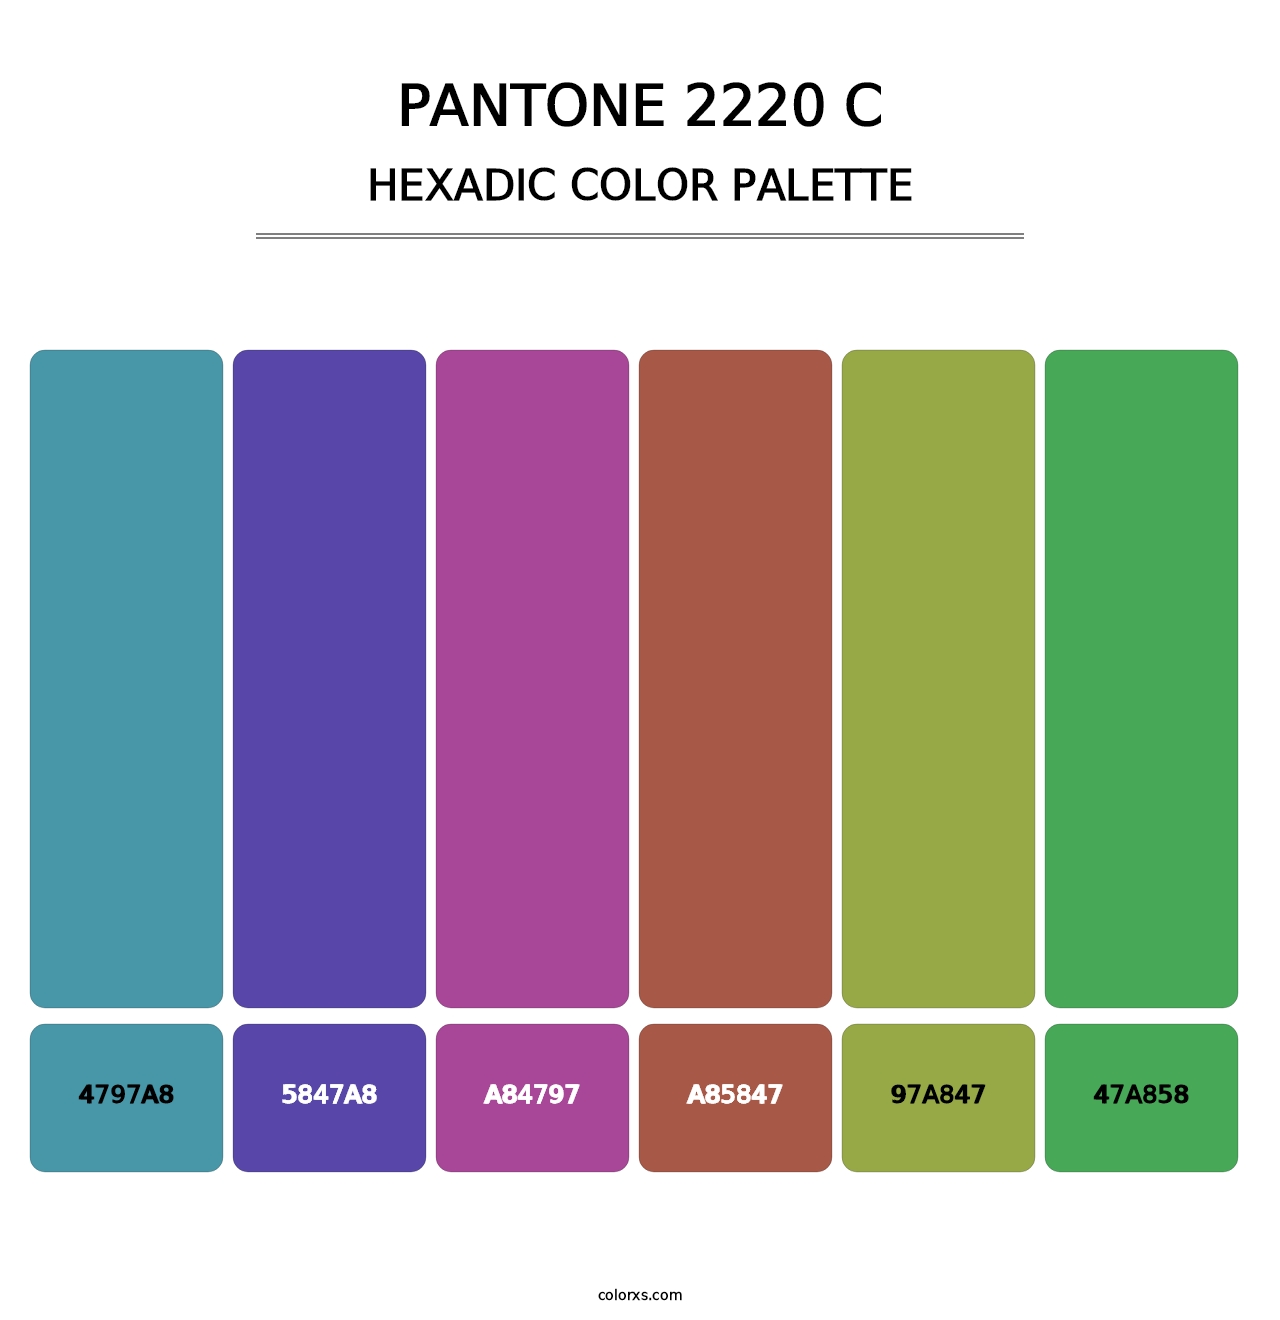 PANTONE 2220 C - Hexadic Color Palette